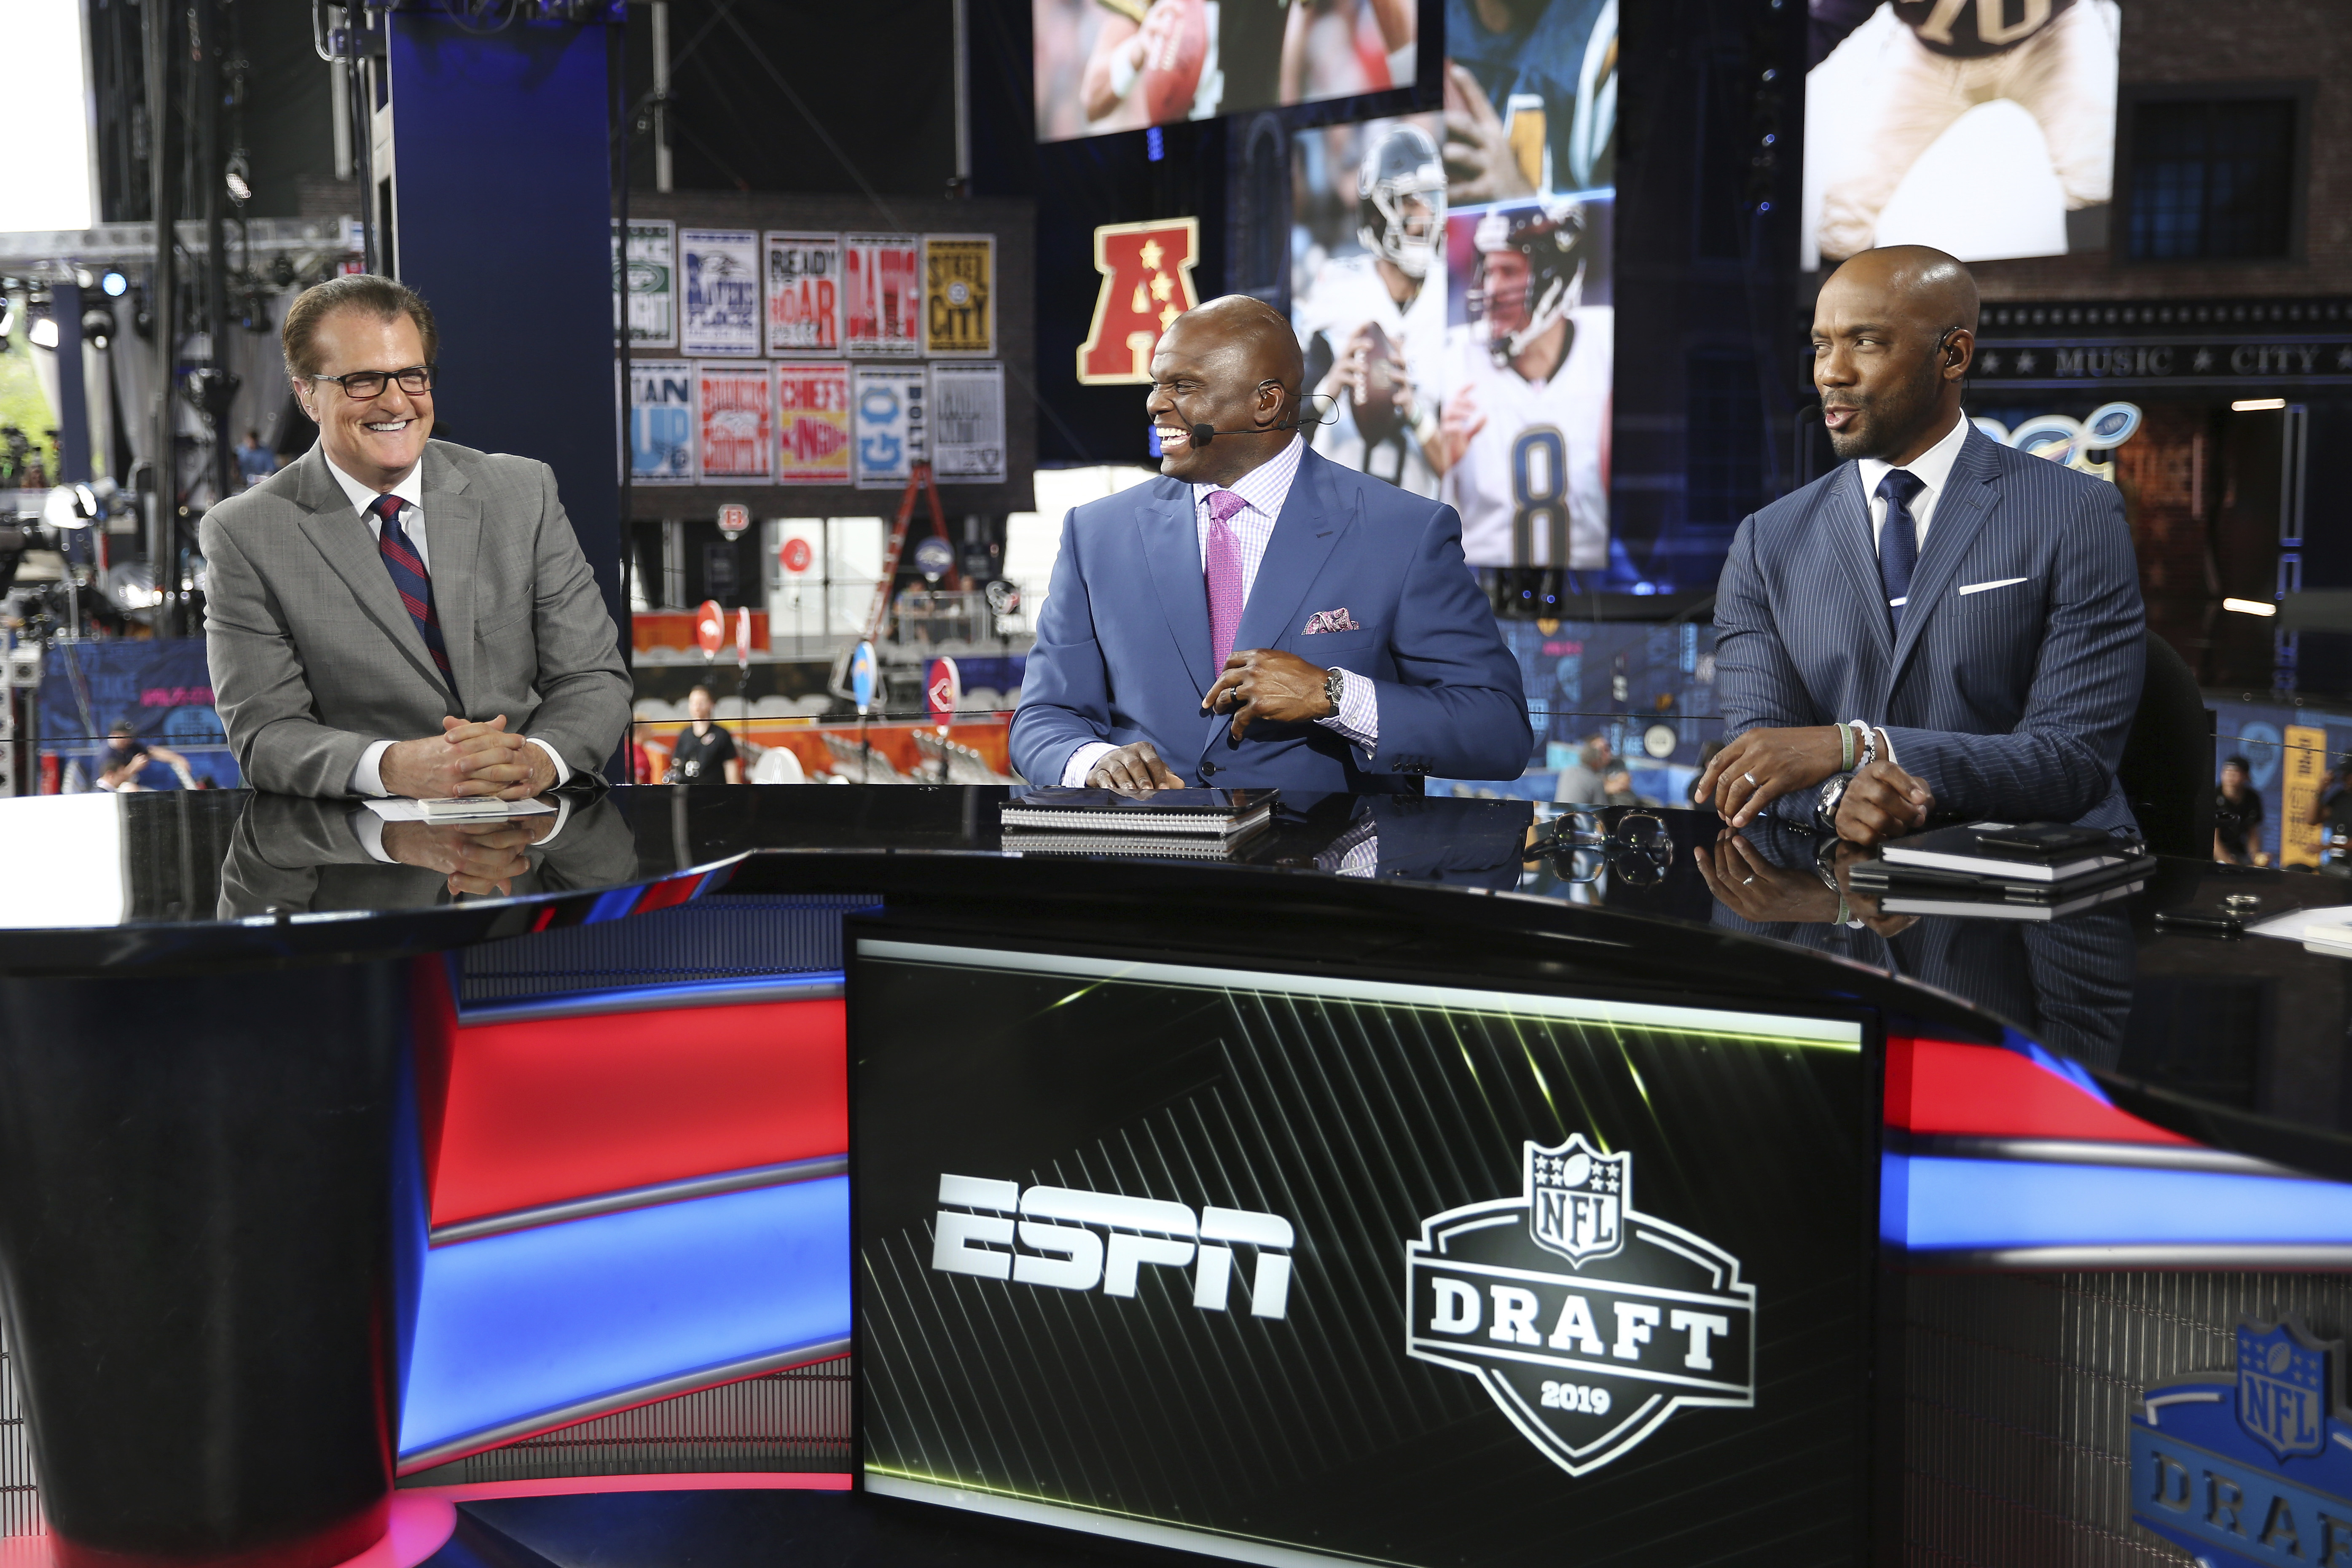 VIDEO: 2022 NFL Draft Media Call with ESPN Senior NFL Draft Analyst Mel  Kiper Jr. - ESPN Press Room U.S.